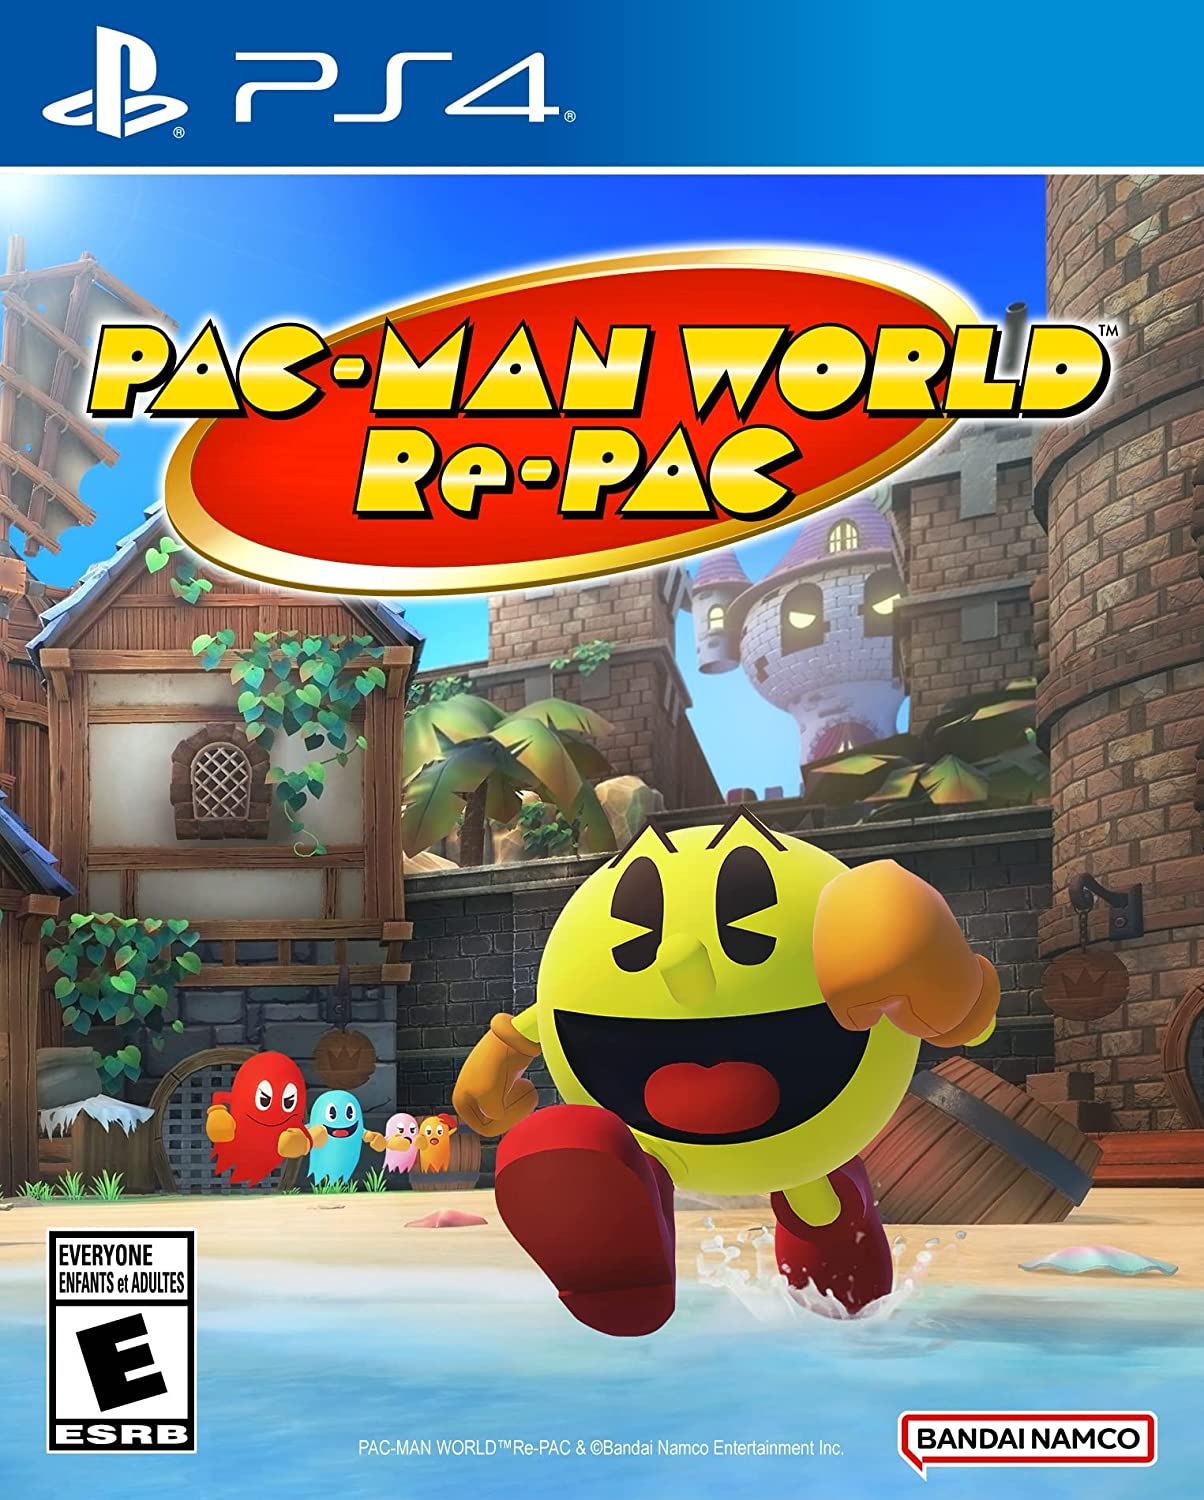 Pacman World Repac PS4